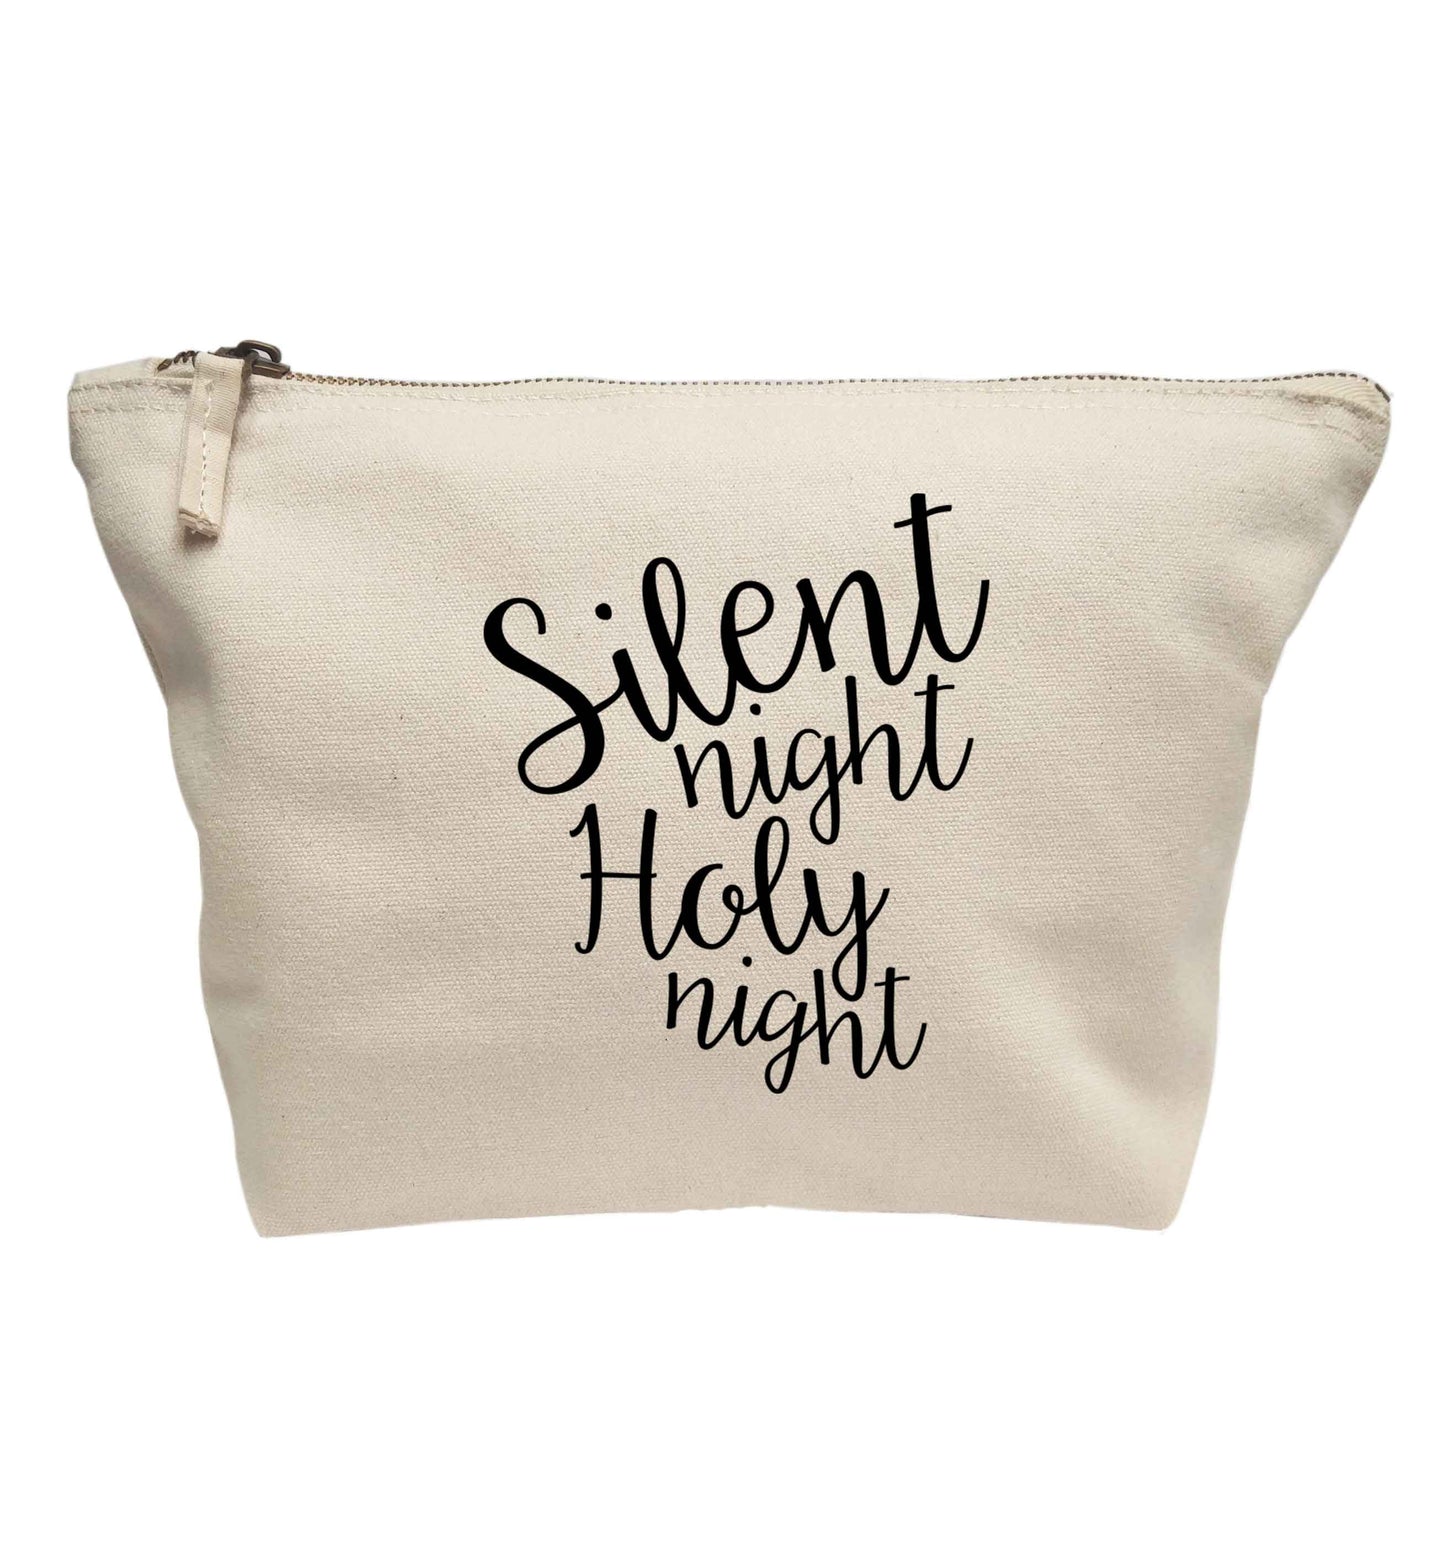 Silent night holy night | Makeup / wash bag